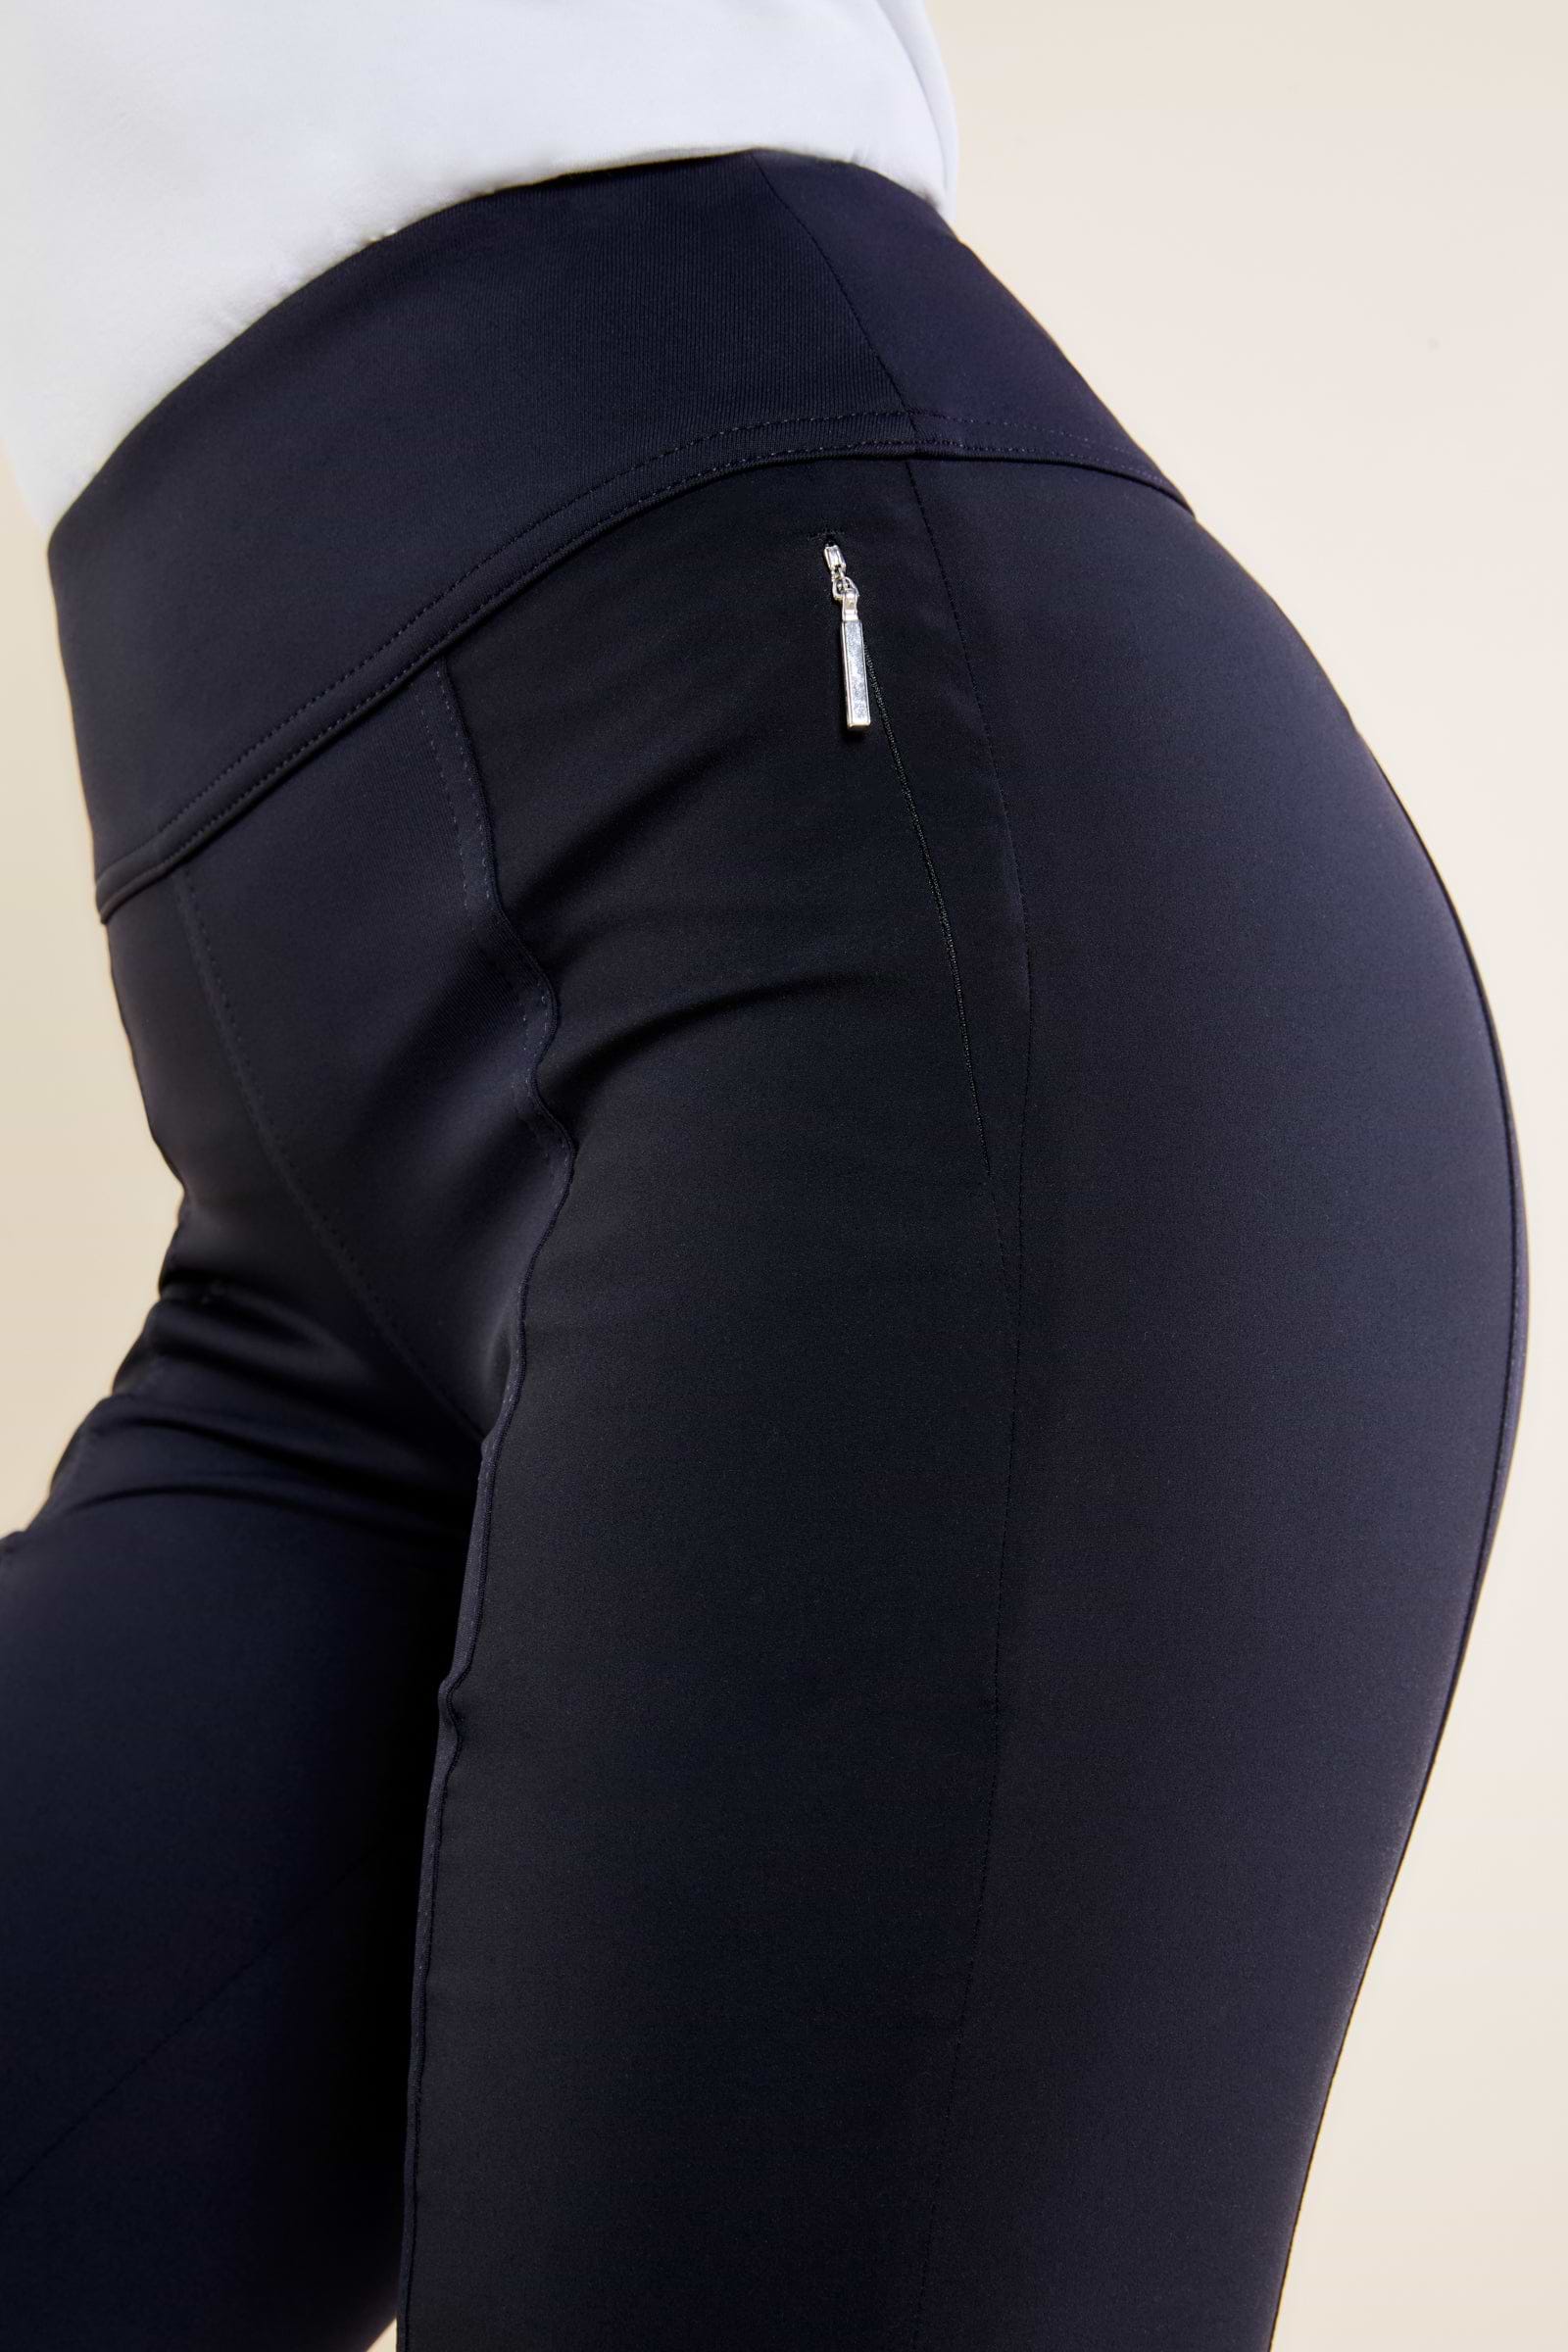 The Best Travel Pants. Front Pocket on Allie Pant in Black